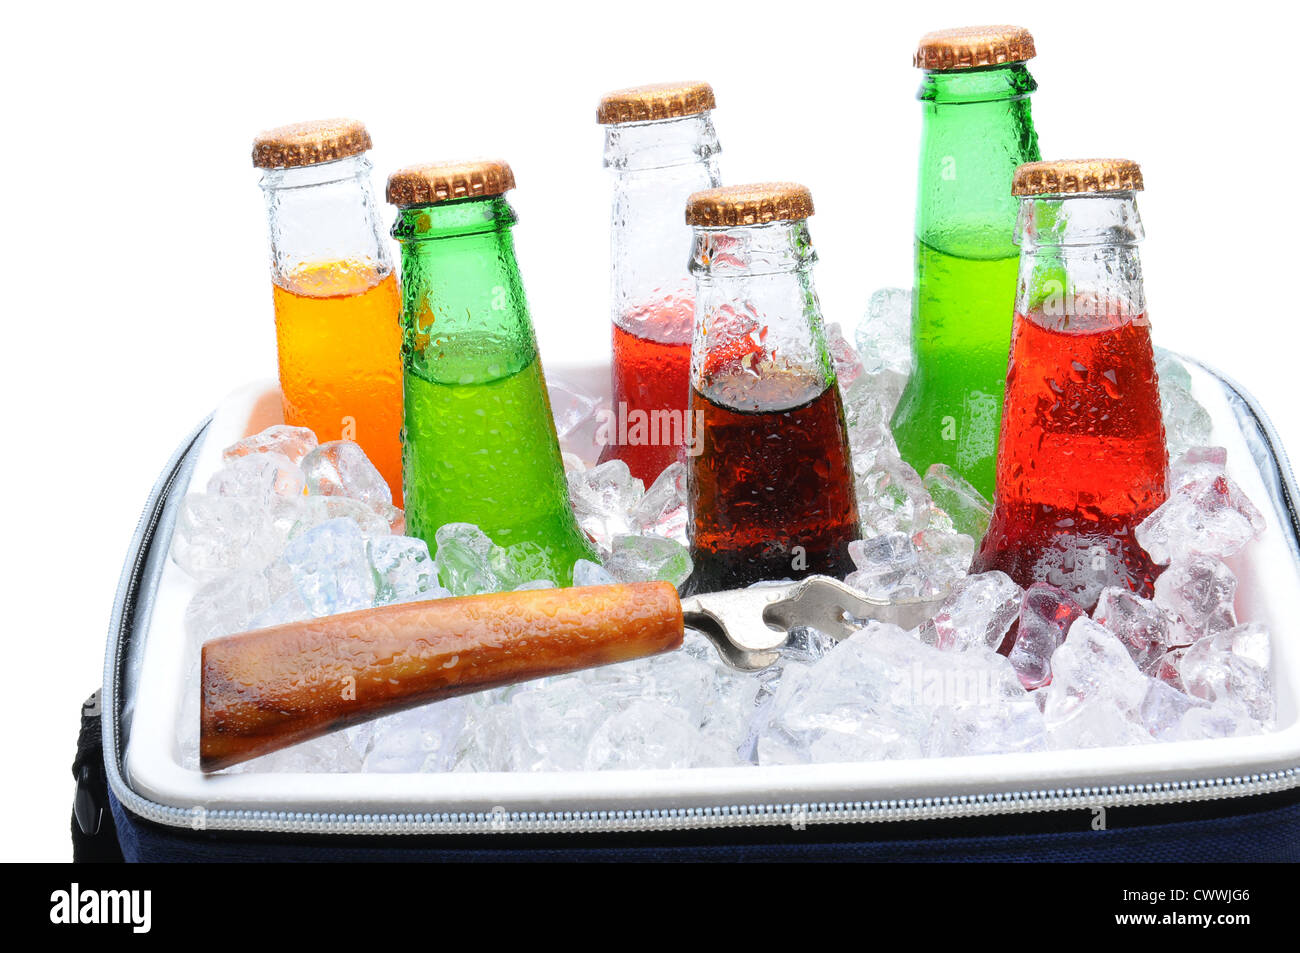 https://c8.alamy.com/comp/CWWJG6/assorted-soda-bottles-in-a-cooler-full-of-ice-with-bottle-opener-horizontal-CWWJG6.jpg